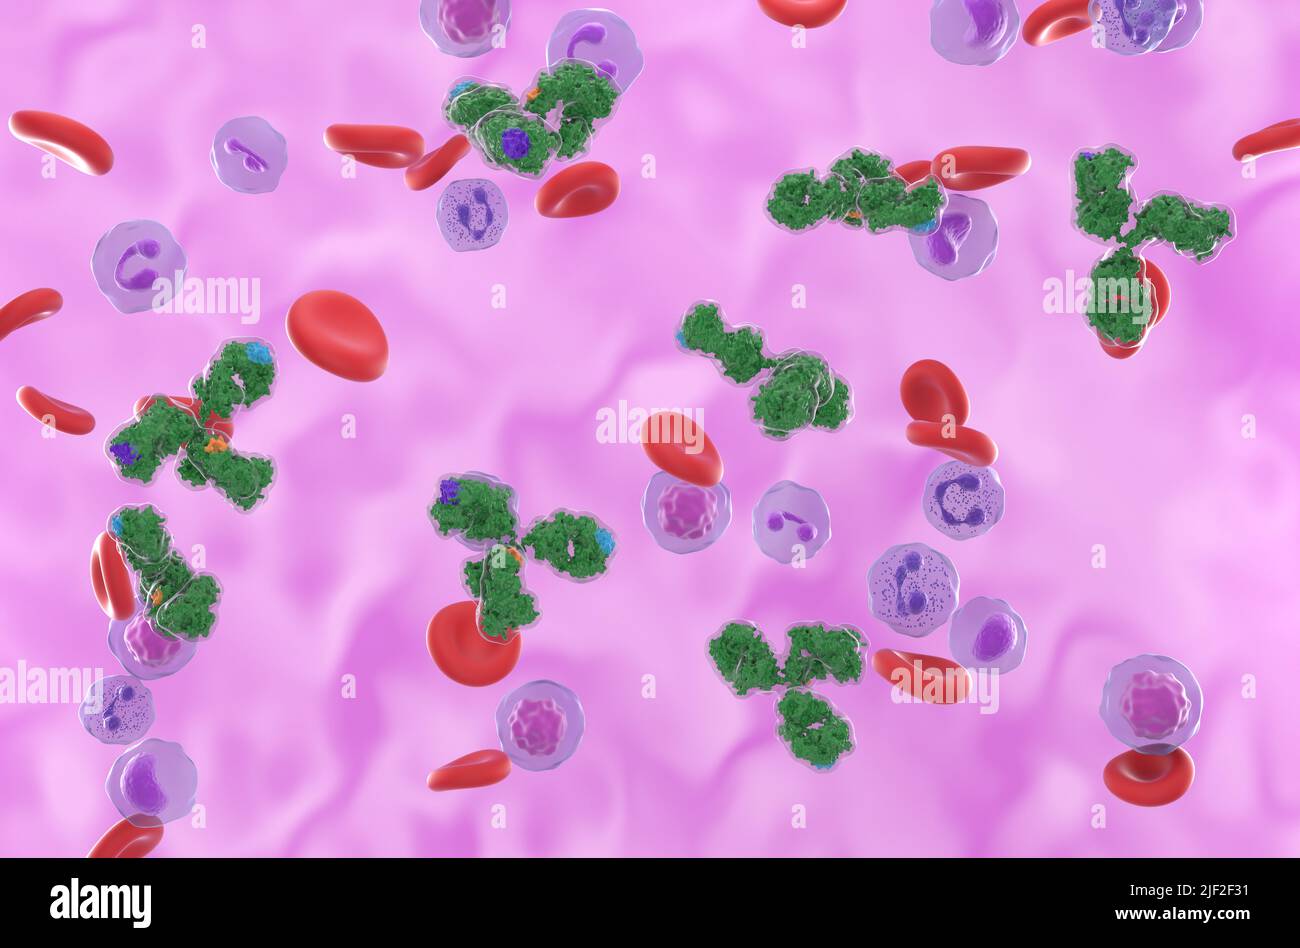 Monoklonale Antikörper (IgG) bioengineered Molecules gegen Leukämien, Lymphome und rheumatoide Arthritis - isometrische Ansicht 3D Abbildung Stockfoto